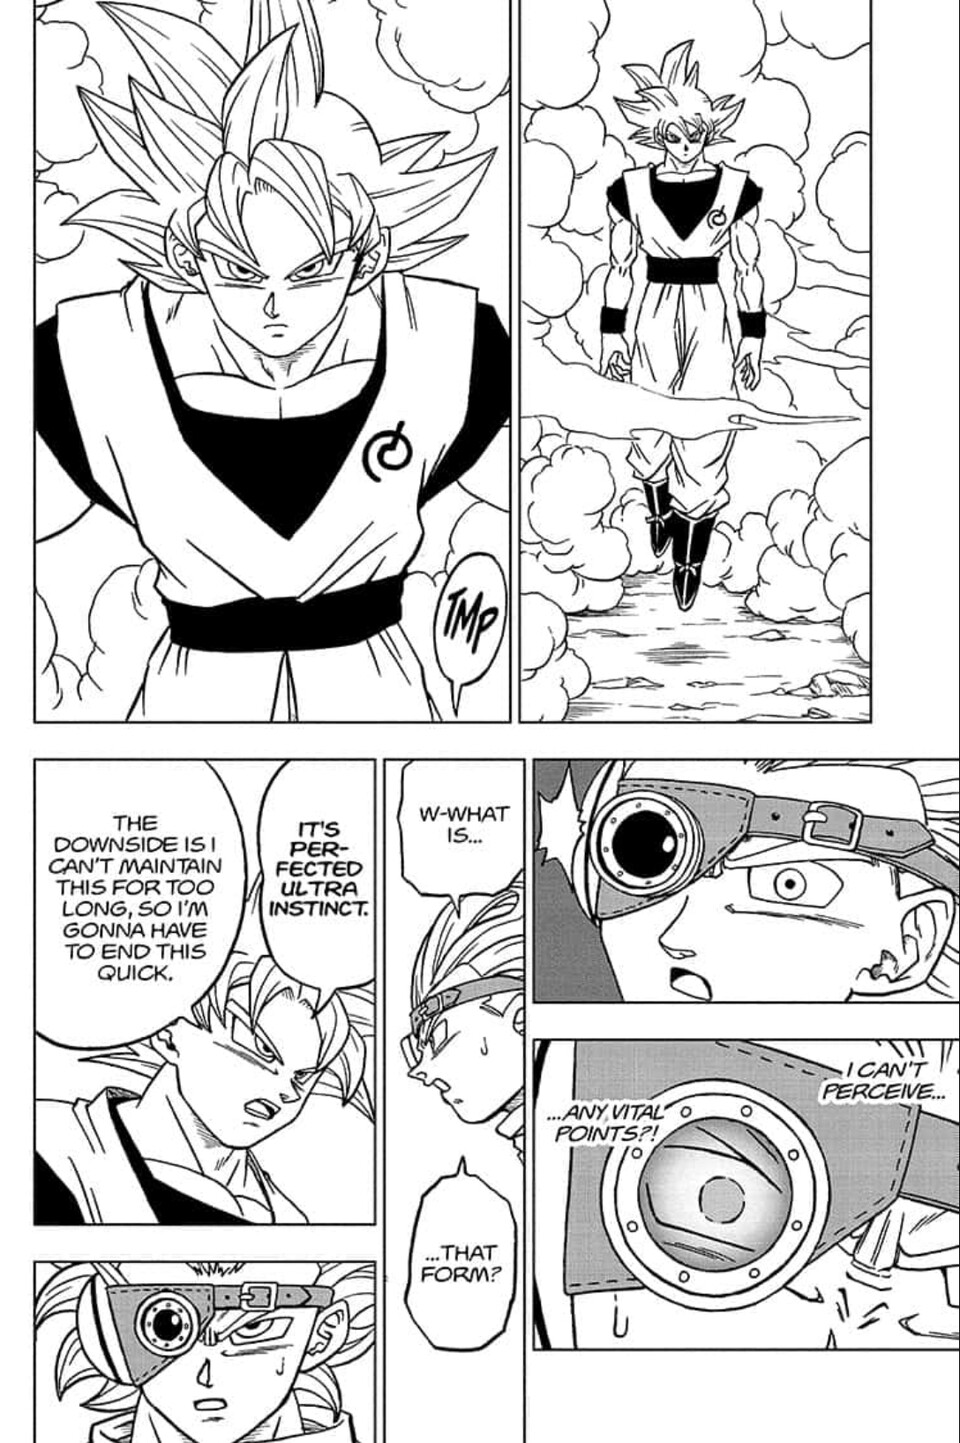 Super Dragon Ball: Son Gokus perfektionierter Ultra Instinkt läst Granolah in Kapitel 73 staunen.